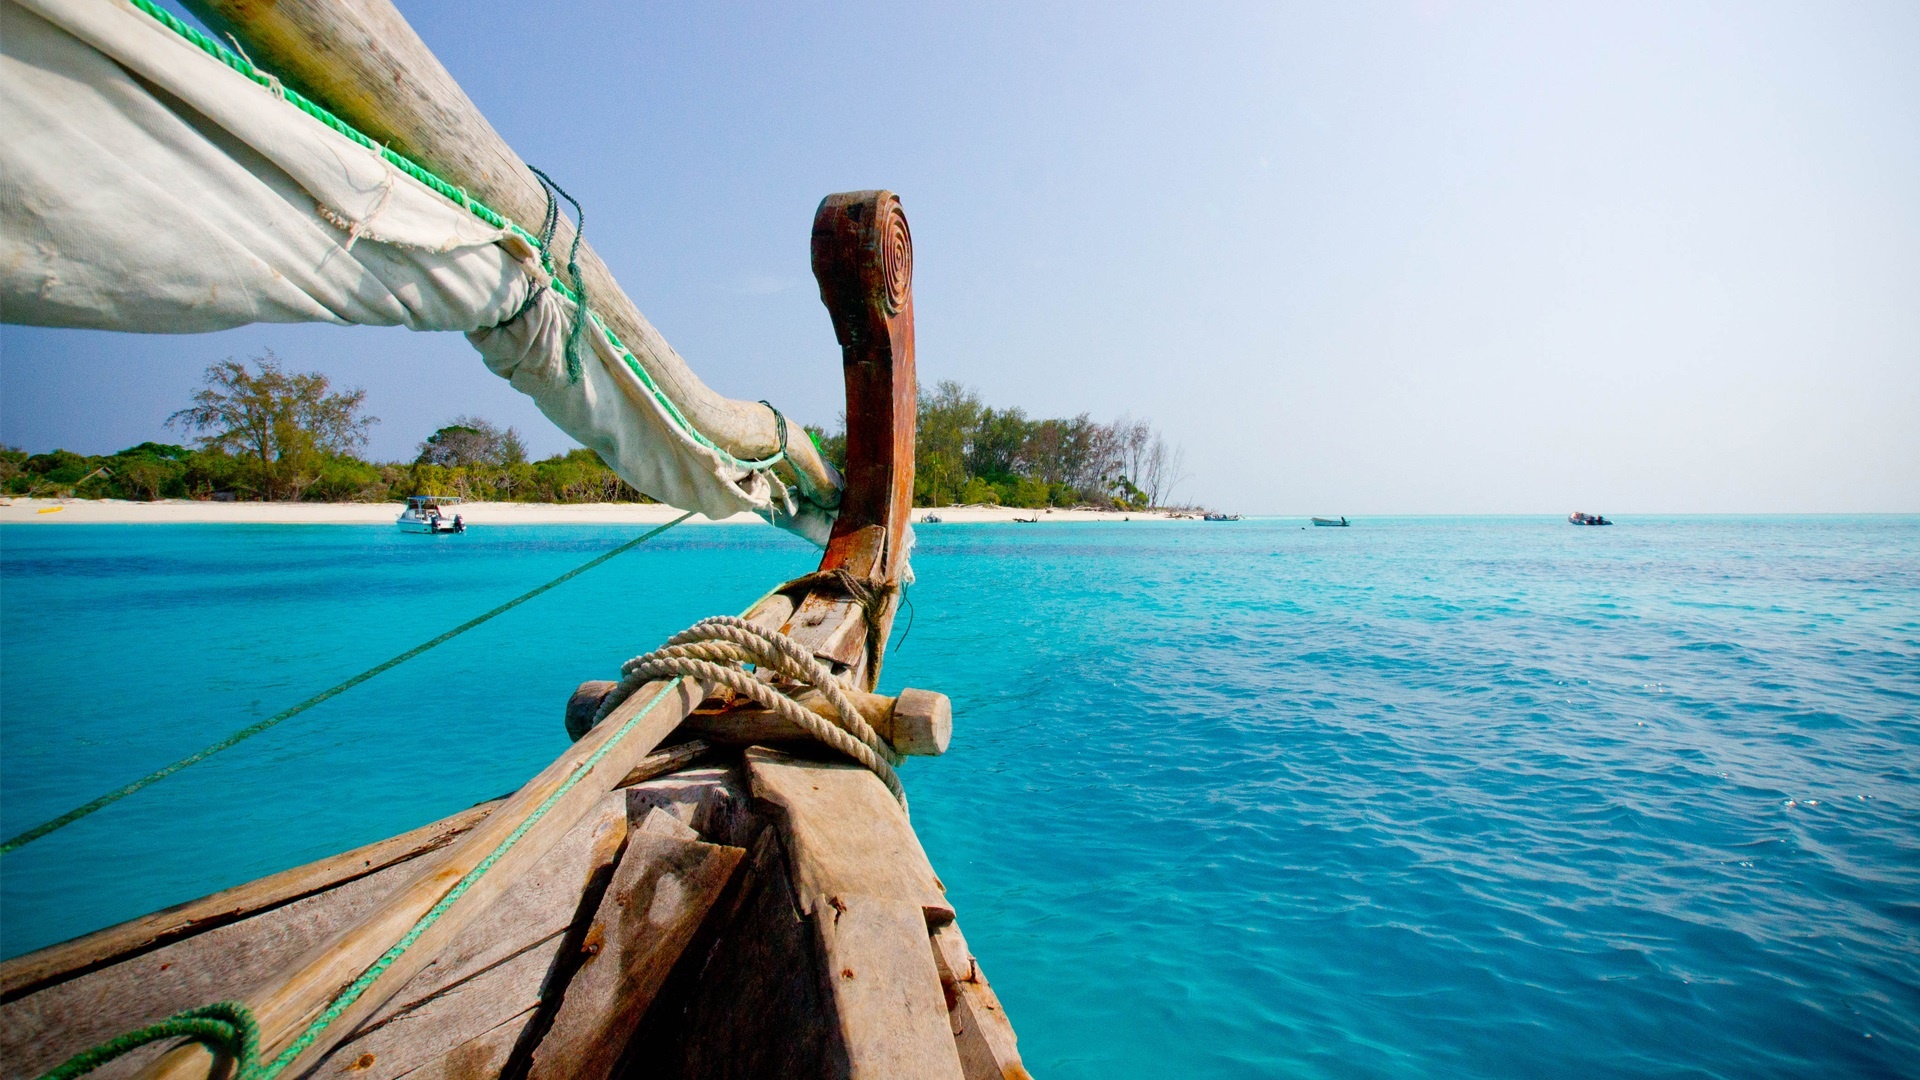 Zanzibar excursions, Adventure seekers, Dhow sailing, Hidden gems, 1920x1080 Full HD Desktop